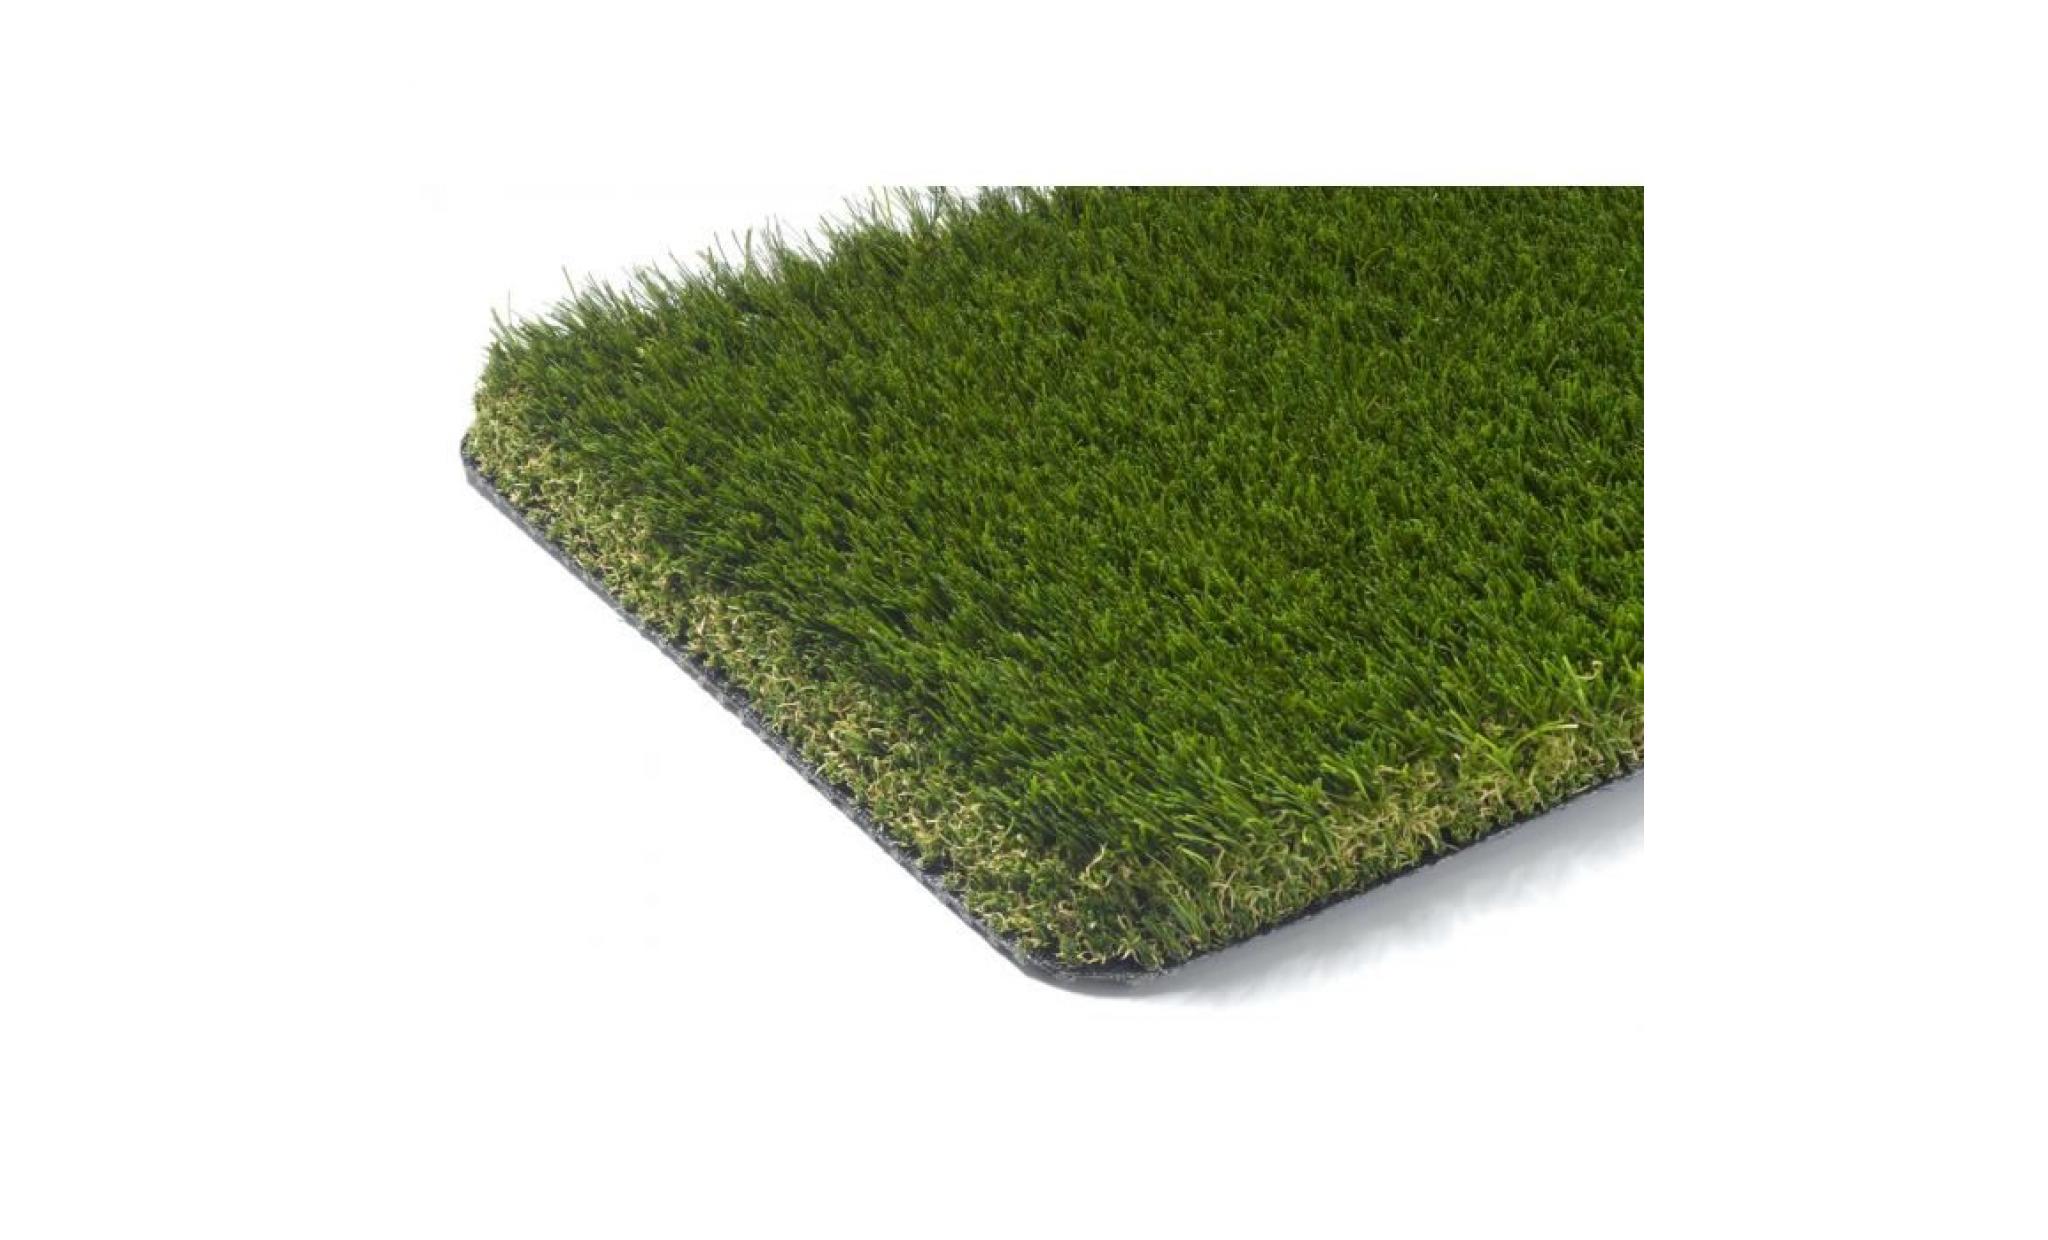 buckingham   tapis type luxe gazon artificiel – pour jardin, terrasse, balcon   vert  [200x350 cm]